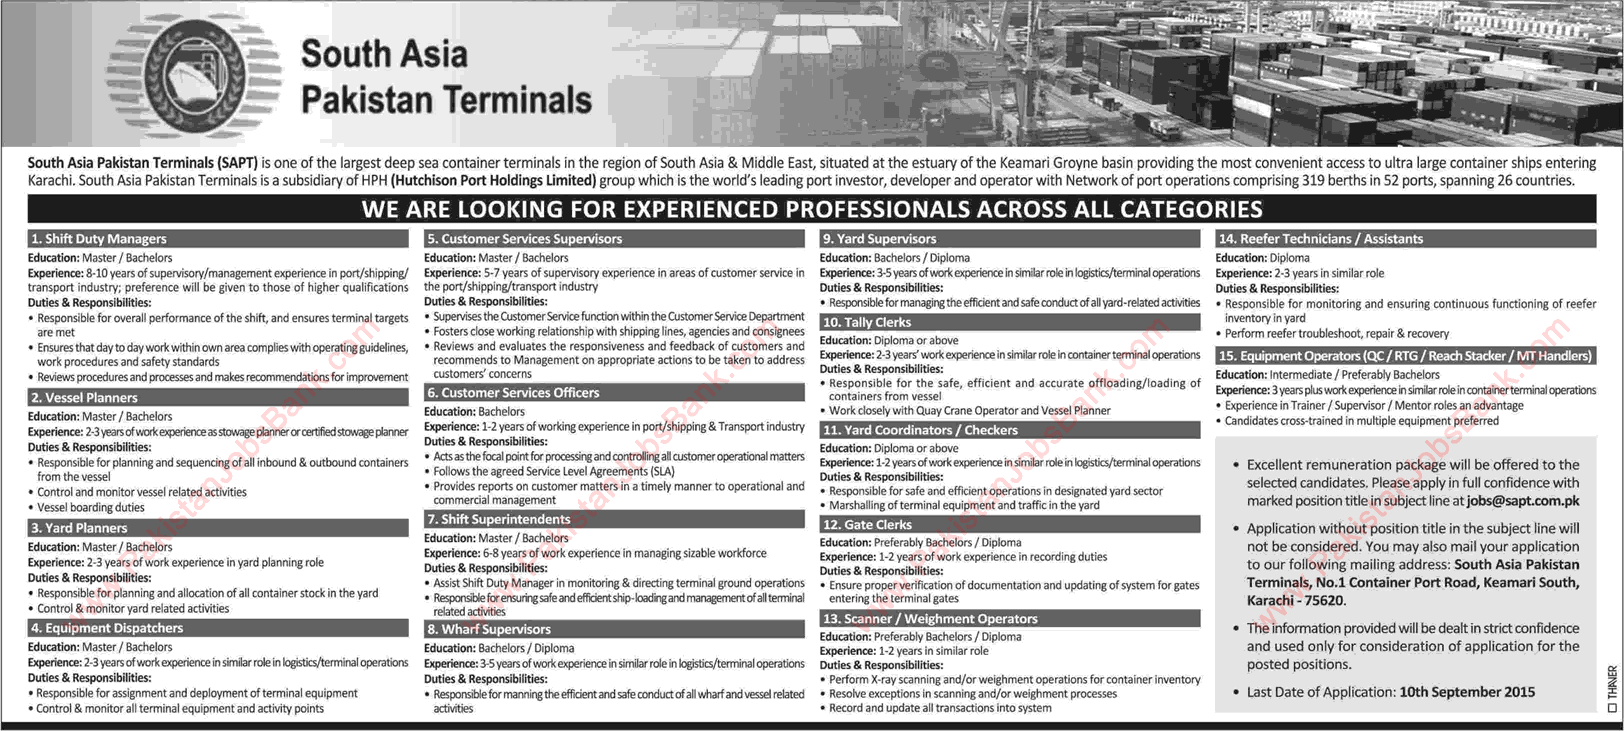 South Asia Pakistan Terminals Karachi Jobs 2015 August SAPT Latest